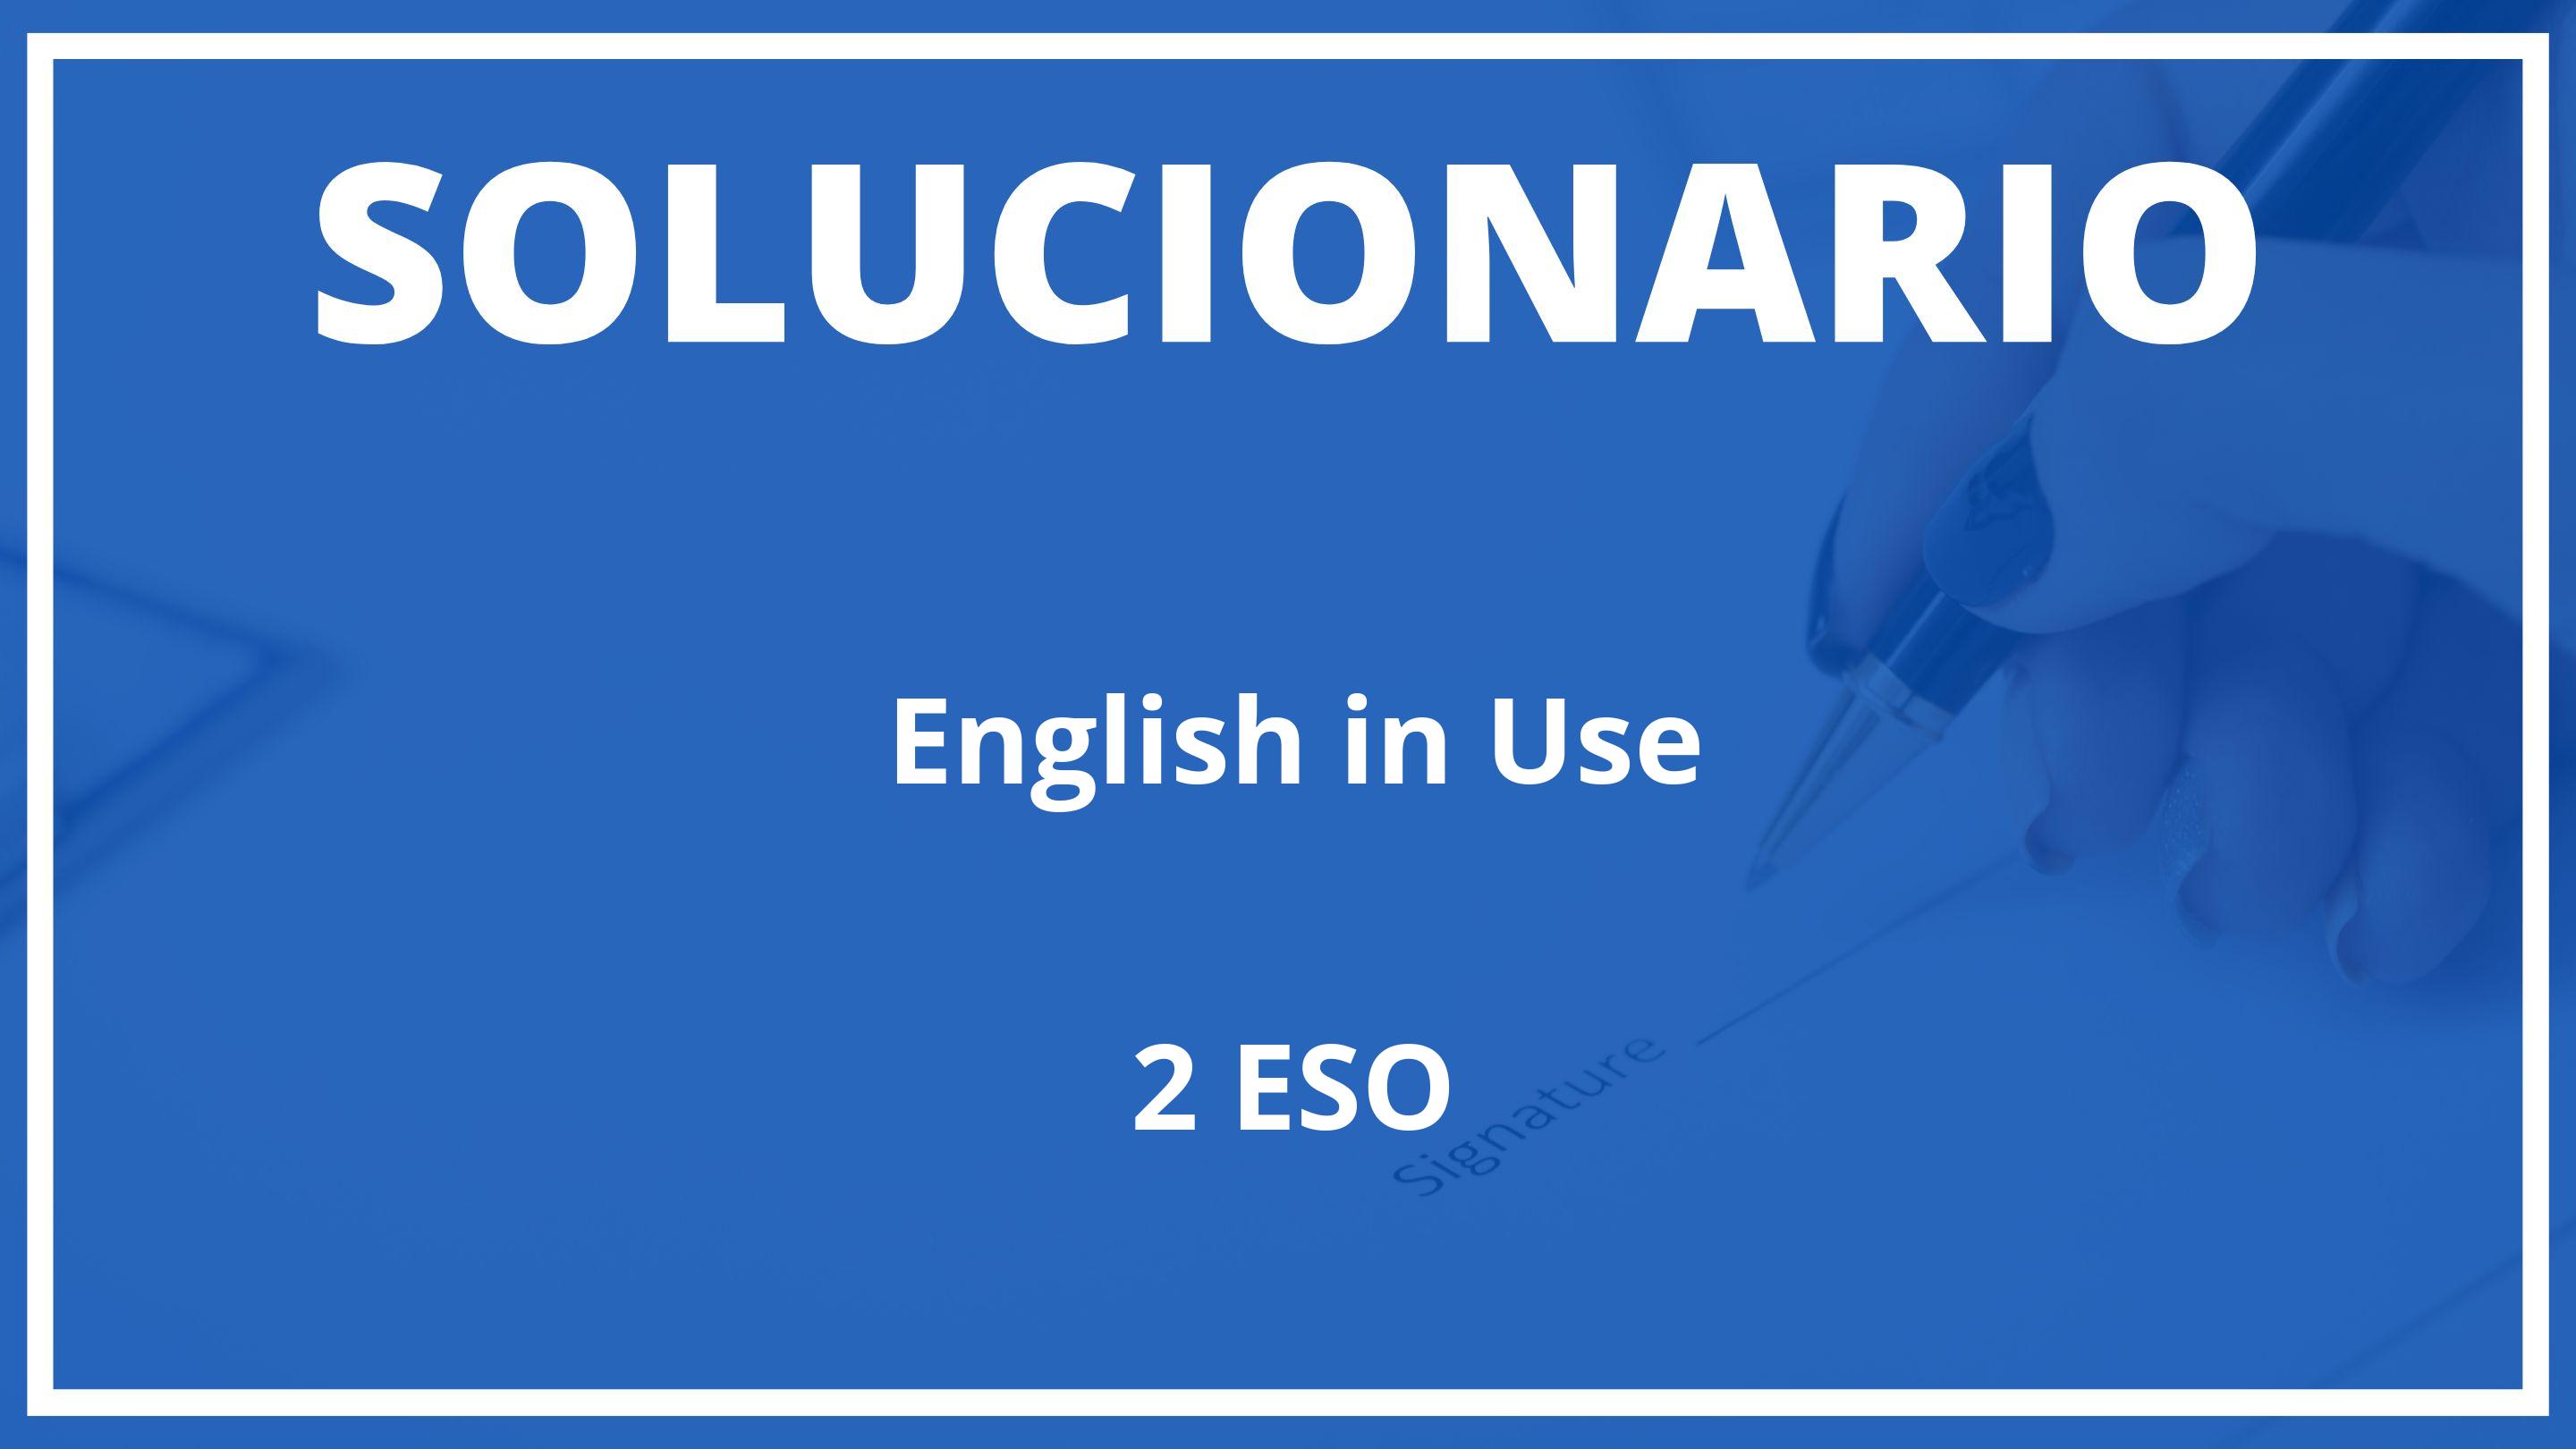 Solucionario English in Use Burlington Books 2 ESO